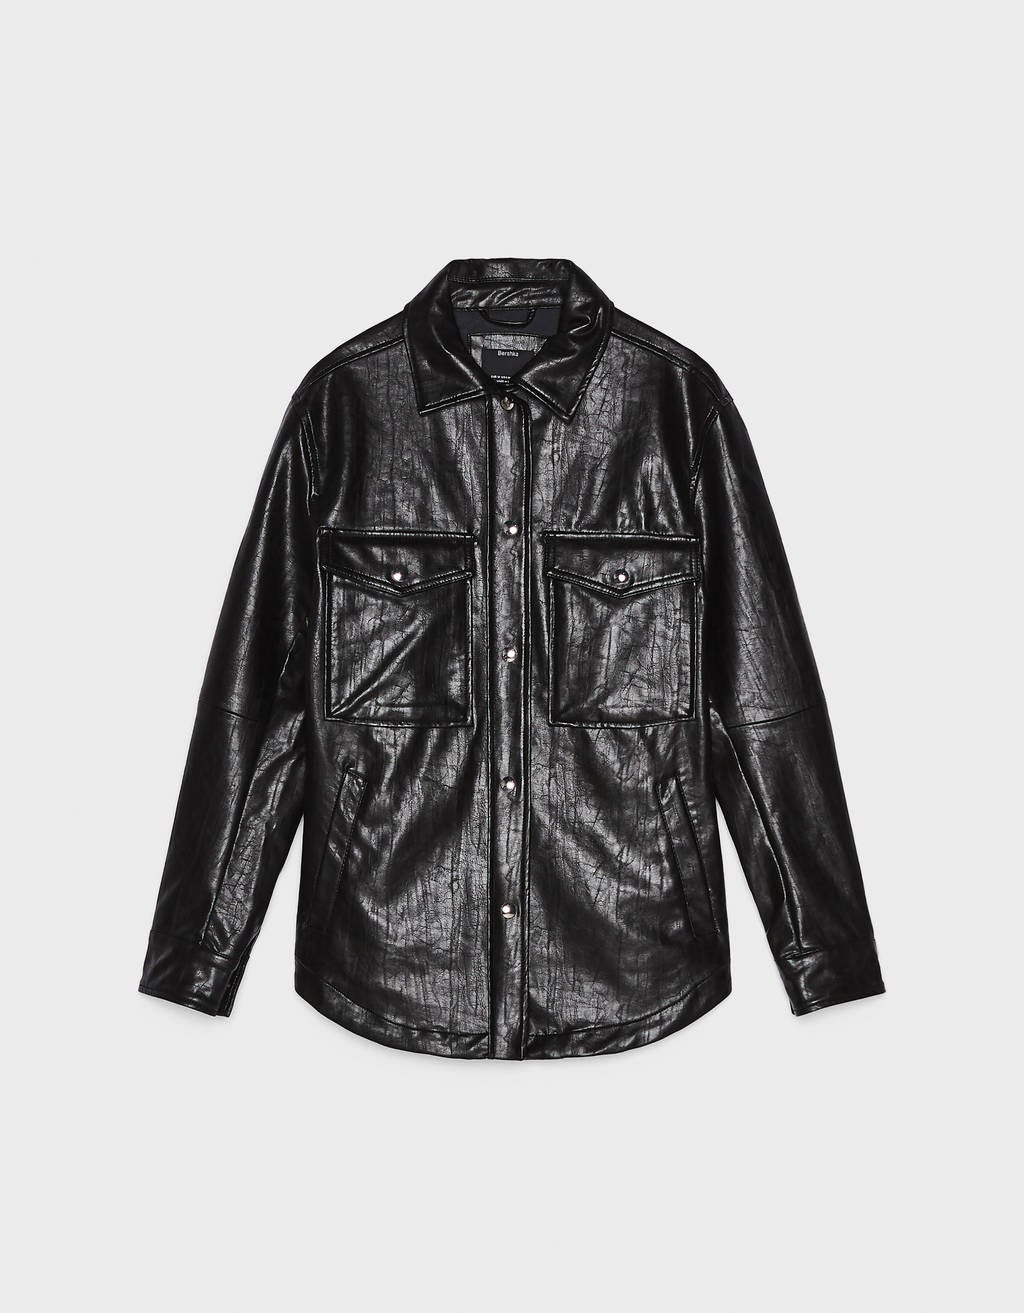 Bershka + Meet Your New Mid-Season Staple: The Leather Shirt